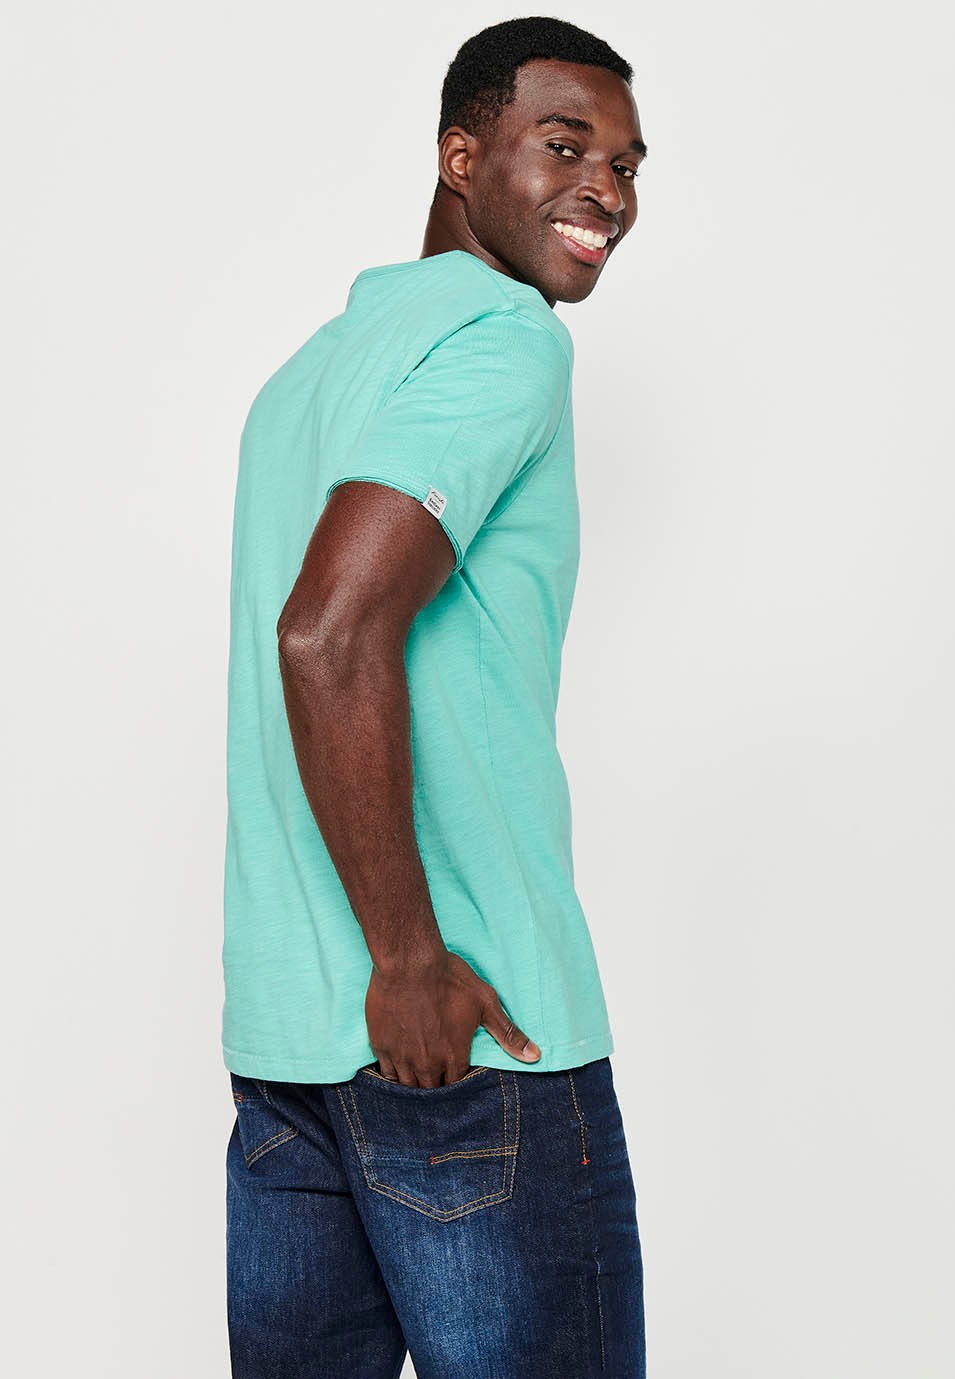 Camiseta básica de manga corta de algodón, cuello V con boton, color menta para hombre 6